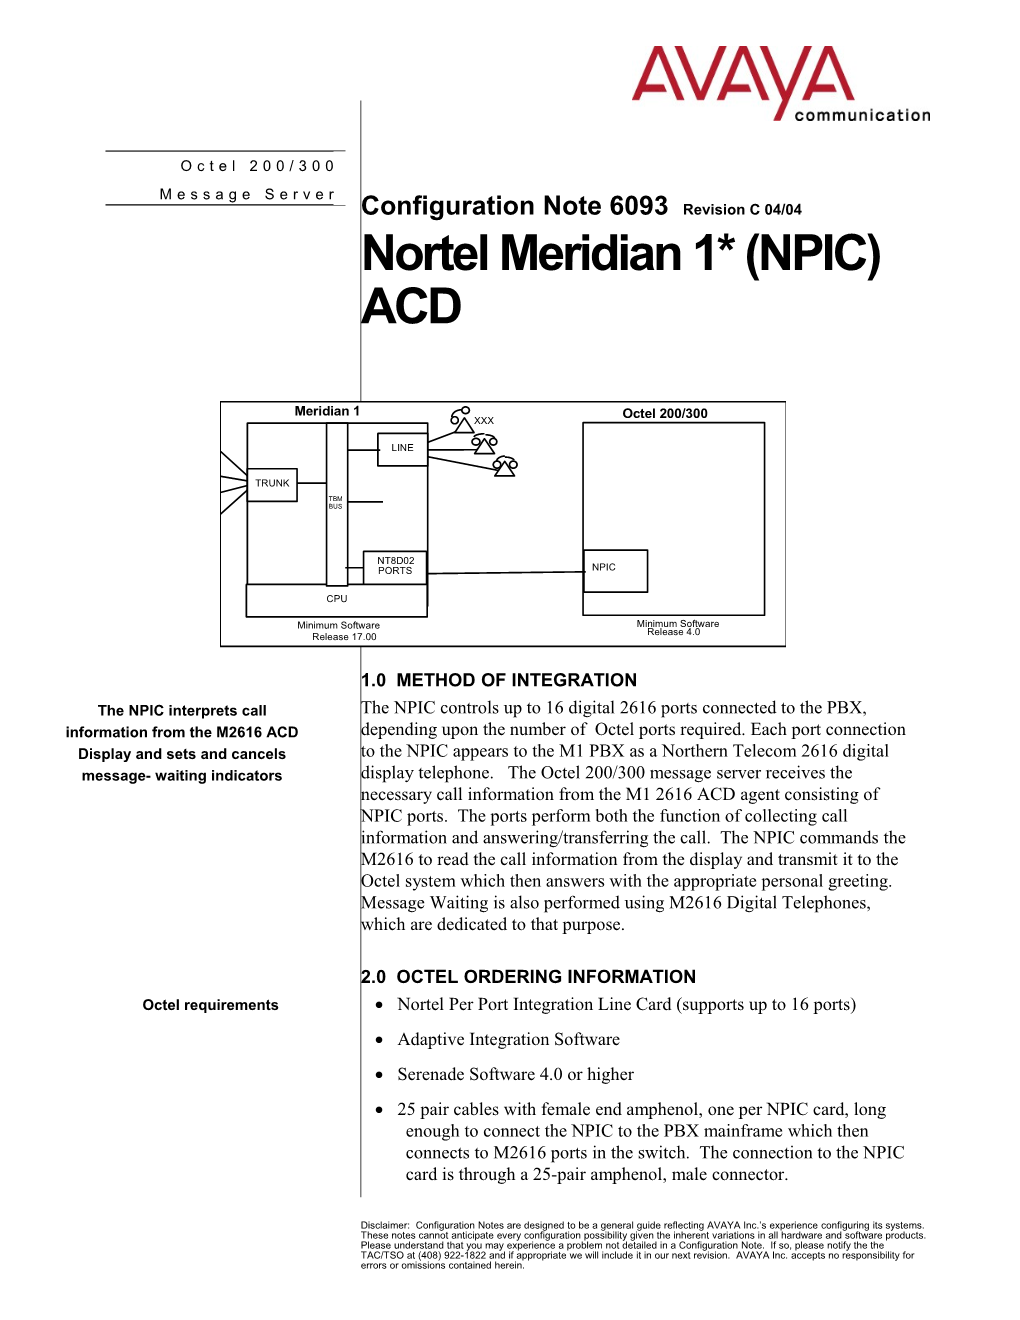 Nortel Meridian 1* (NPIC) ACD